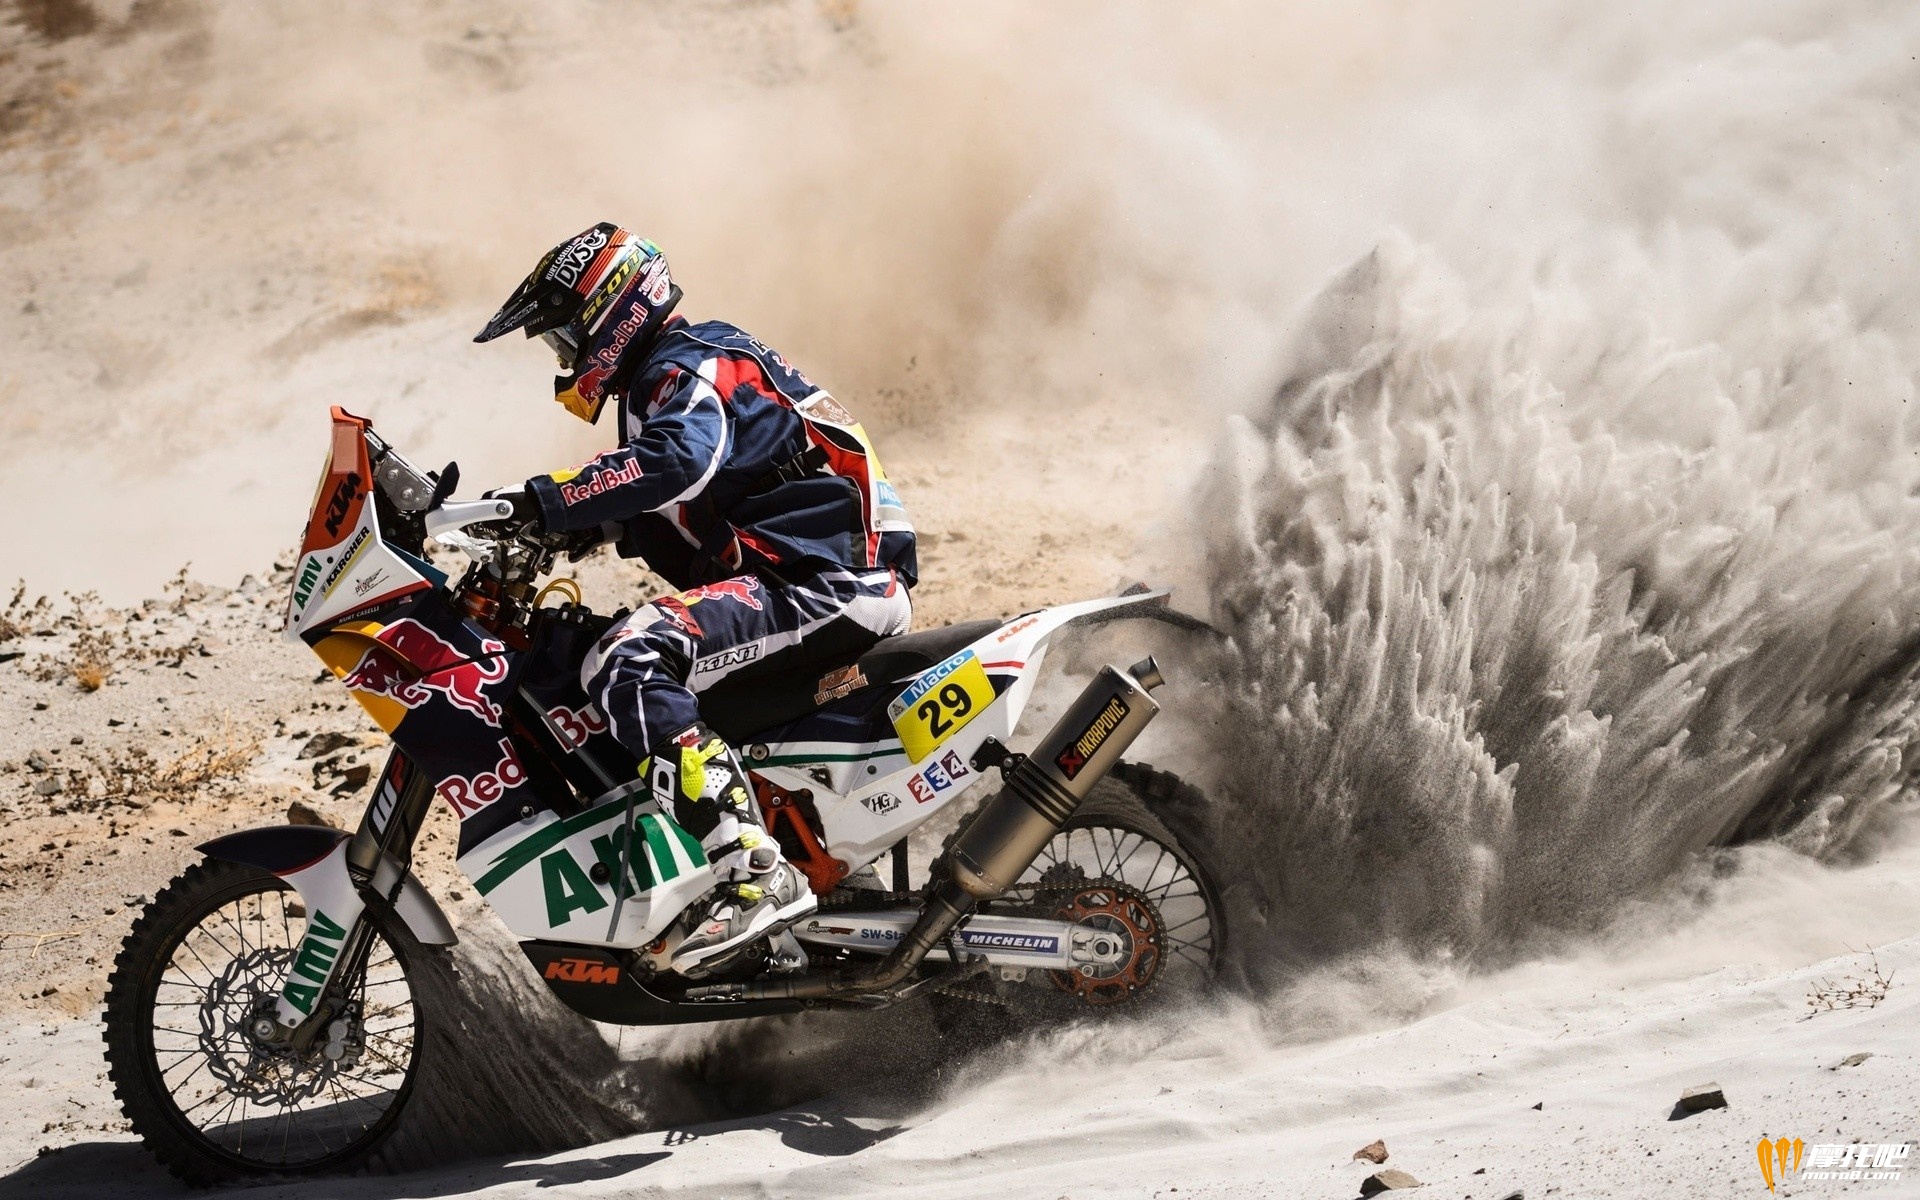 dakar-dust-ktm-motorbikes-rally-2772467-1920x1200 (2).jpg